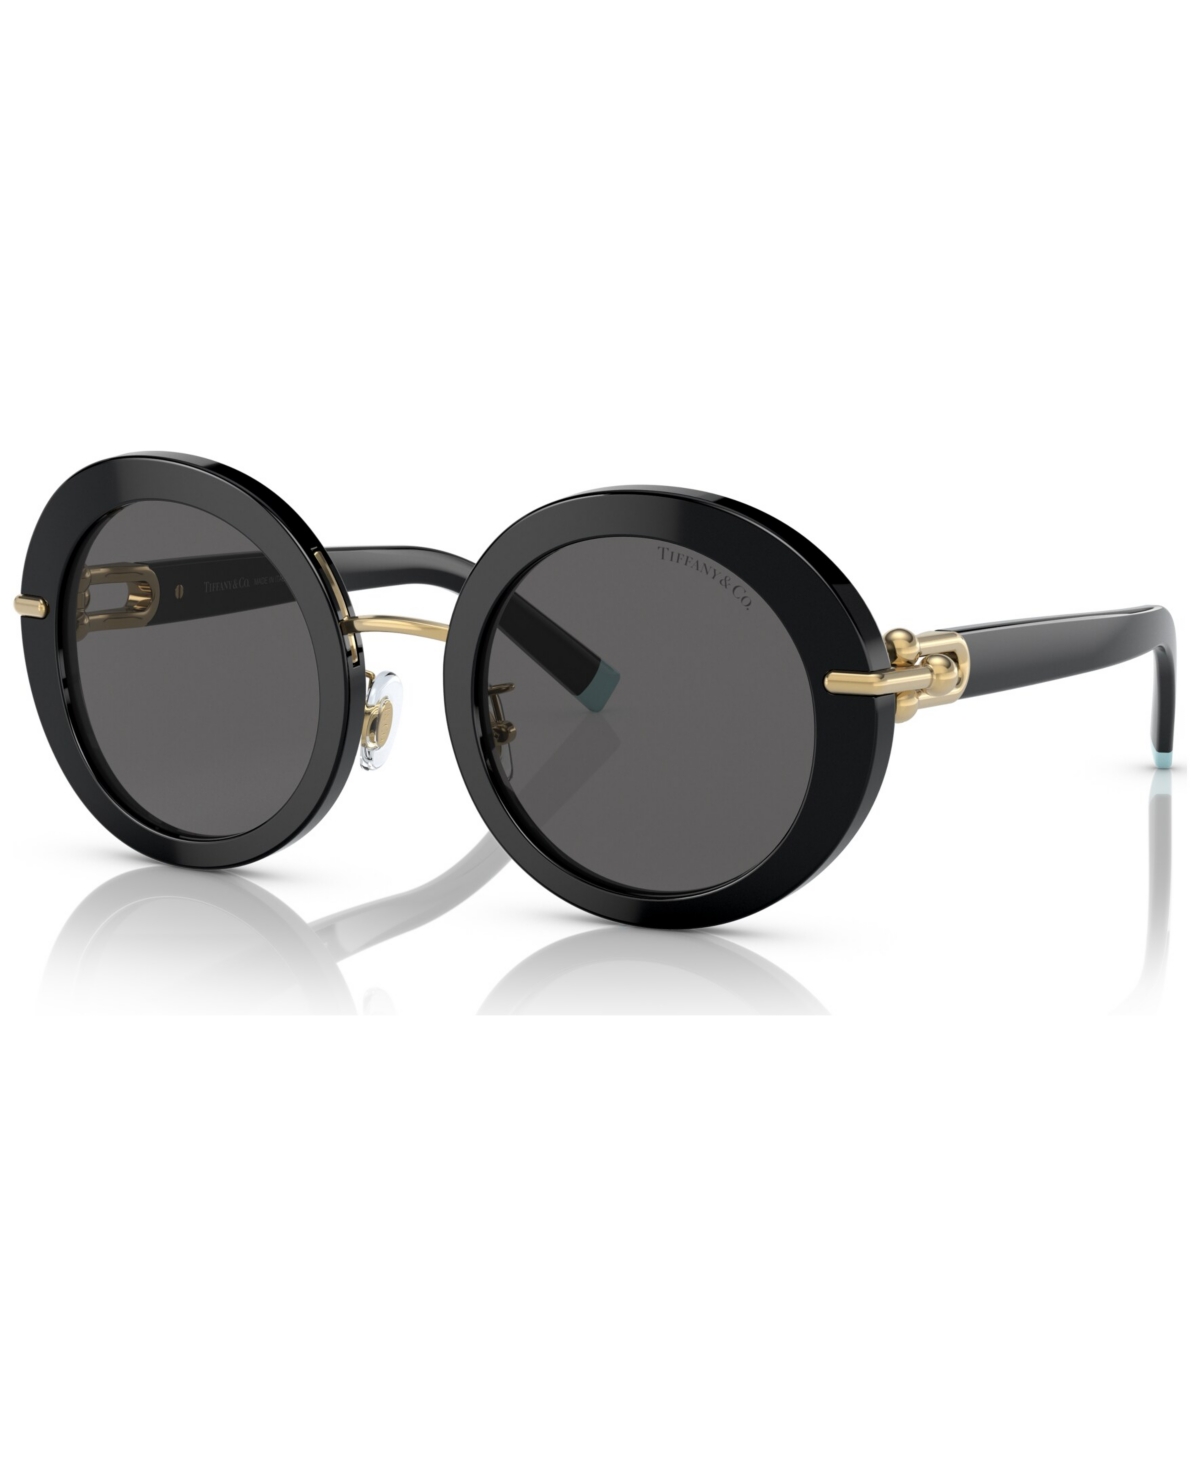 Tiffany & Co Women's Sunglasses, Tf420150-x In Black